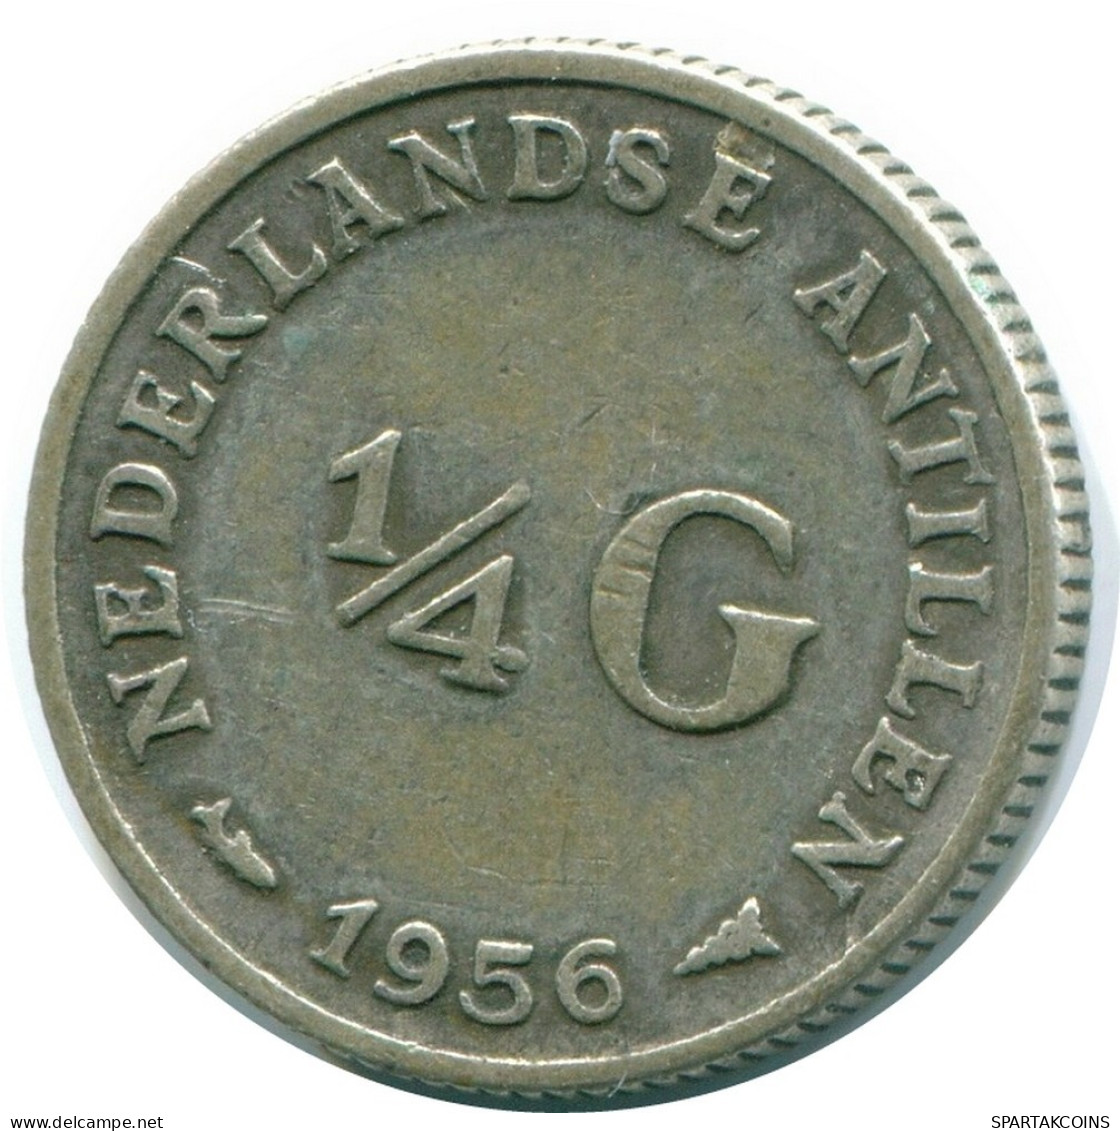 1/4 GULDEN 1956 NETHERLANDS ANTILLES SILVER Colonial Coin #NL10935.4.U.A - Netherlands Antilles